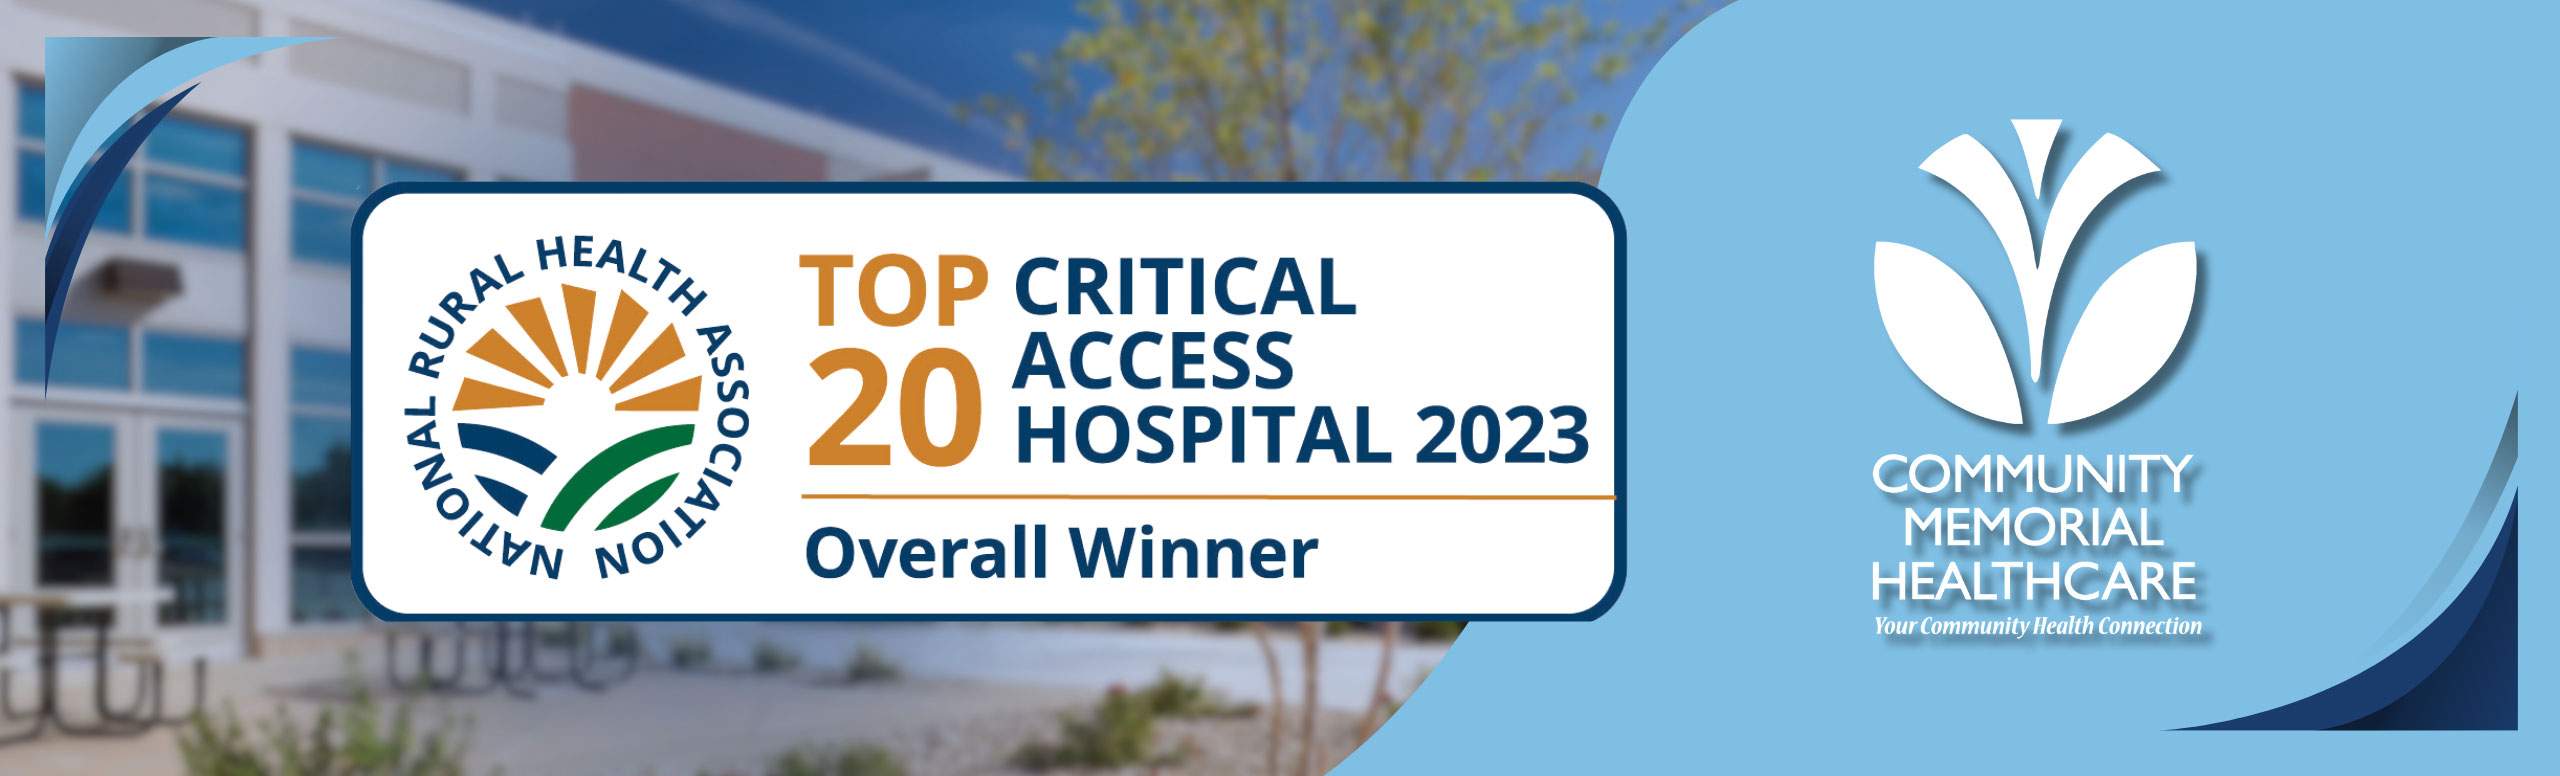 Top 20 Critical Access Hospital 2023 Overall Winner